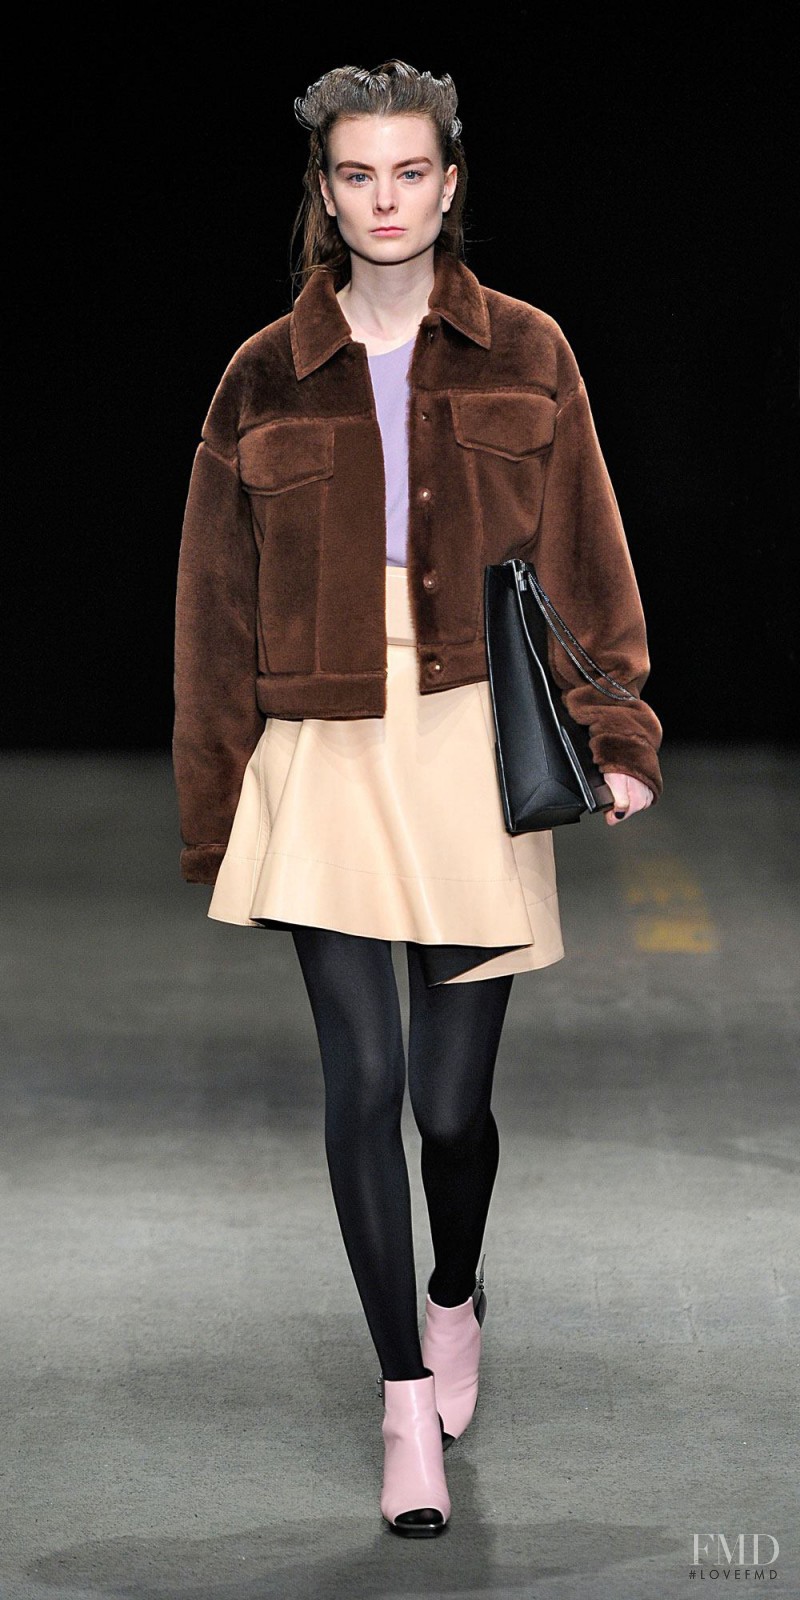 Emilie Ellehauge featured in  the 3.1 Phillip Lim fashion show for Autumn/Winter 2014